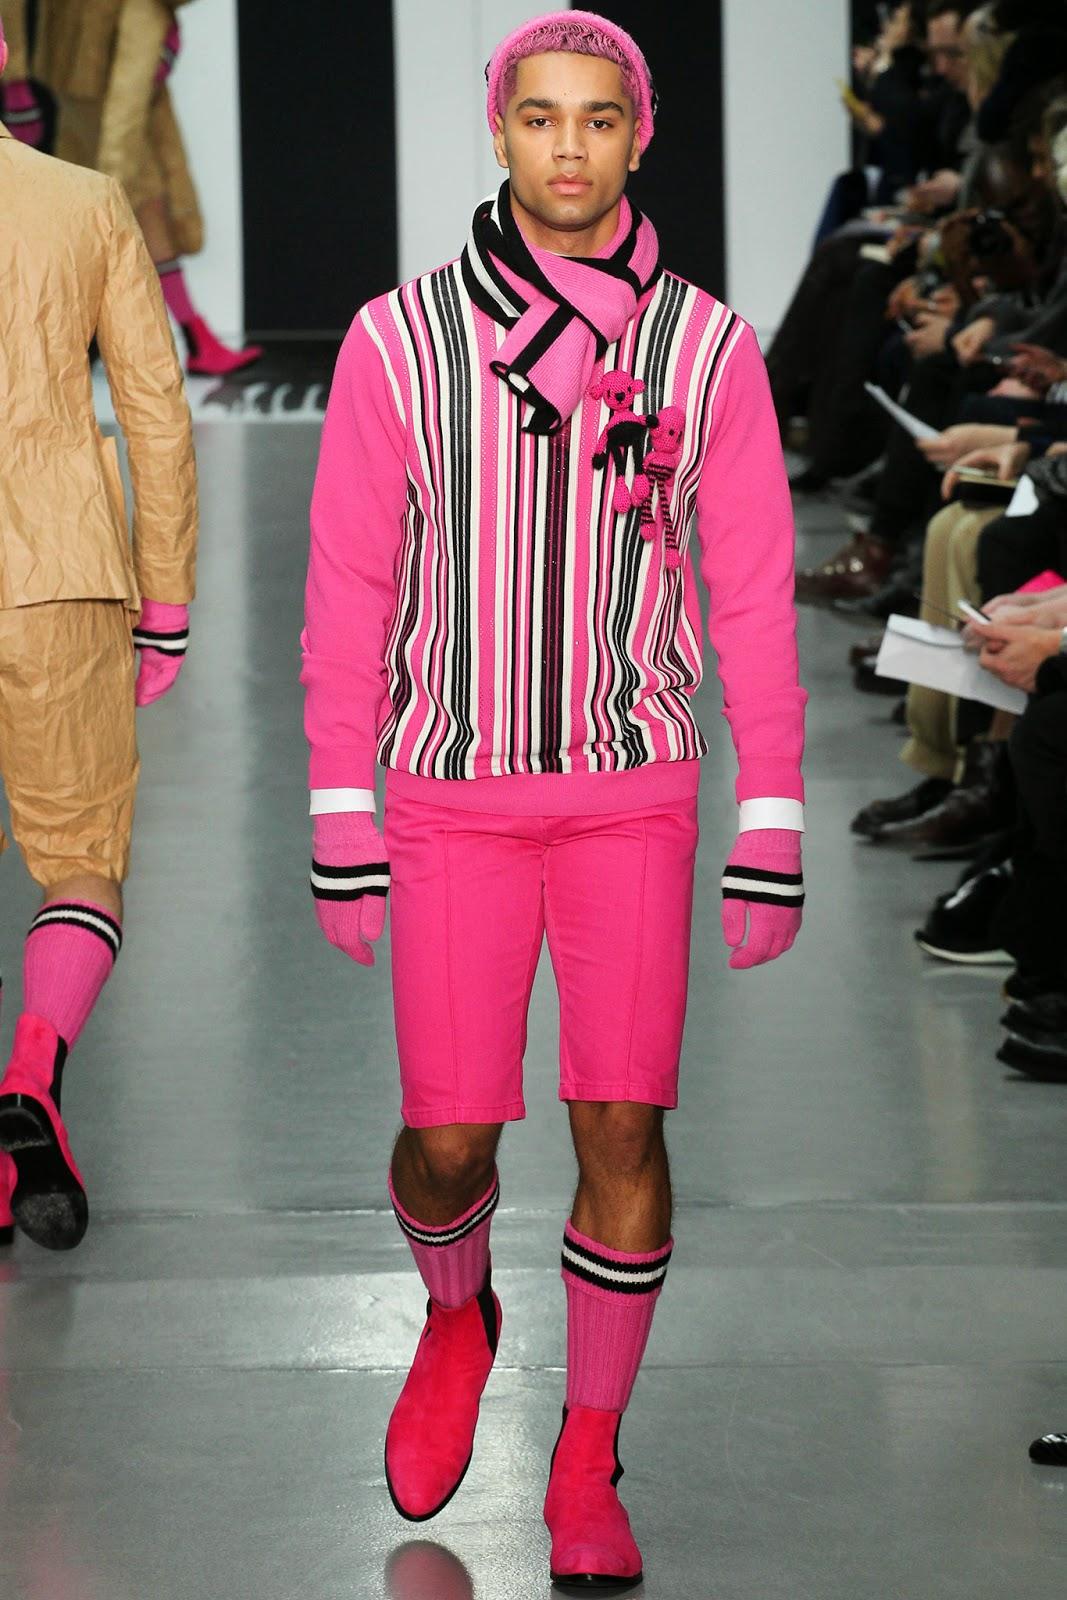 Life is better in pink : Le défilé Sibling Menswear pour l'hiver 2015...